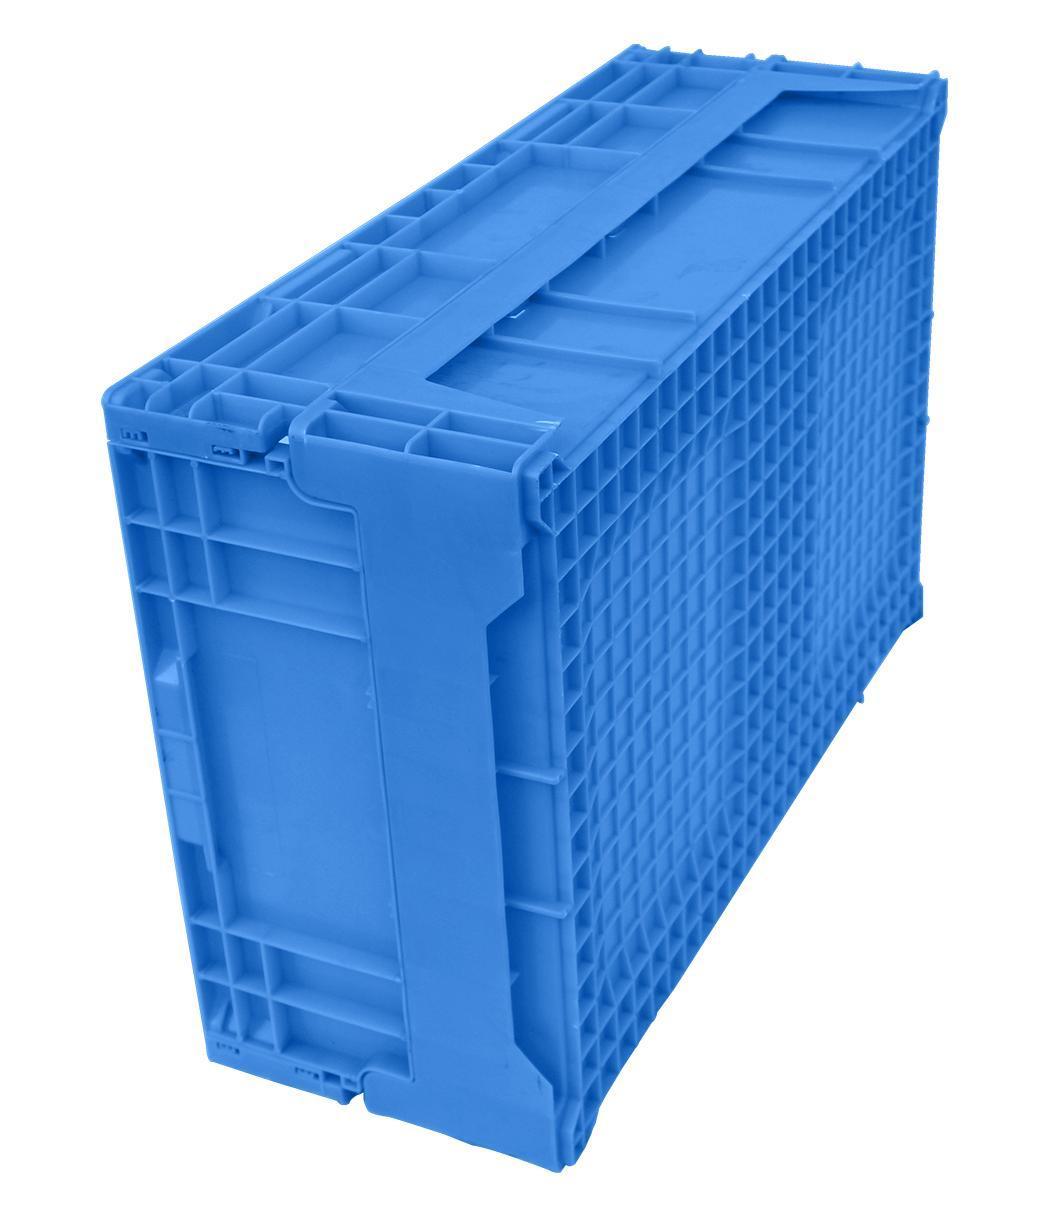 X11j S Folding Containers Adjustable Plastic Storage Box, Foldable Storage Box, Hard Plastic Collapsible Storage Box